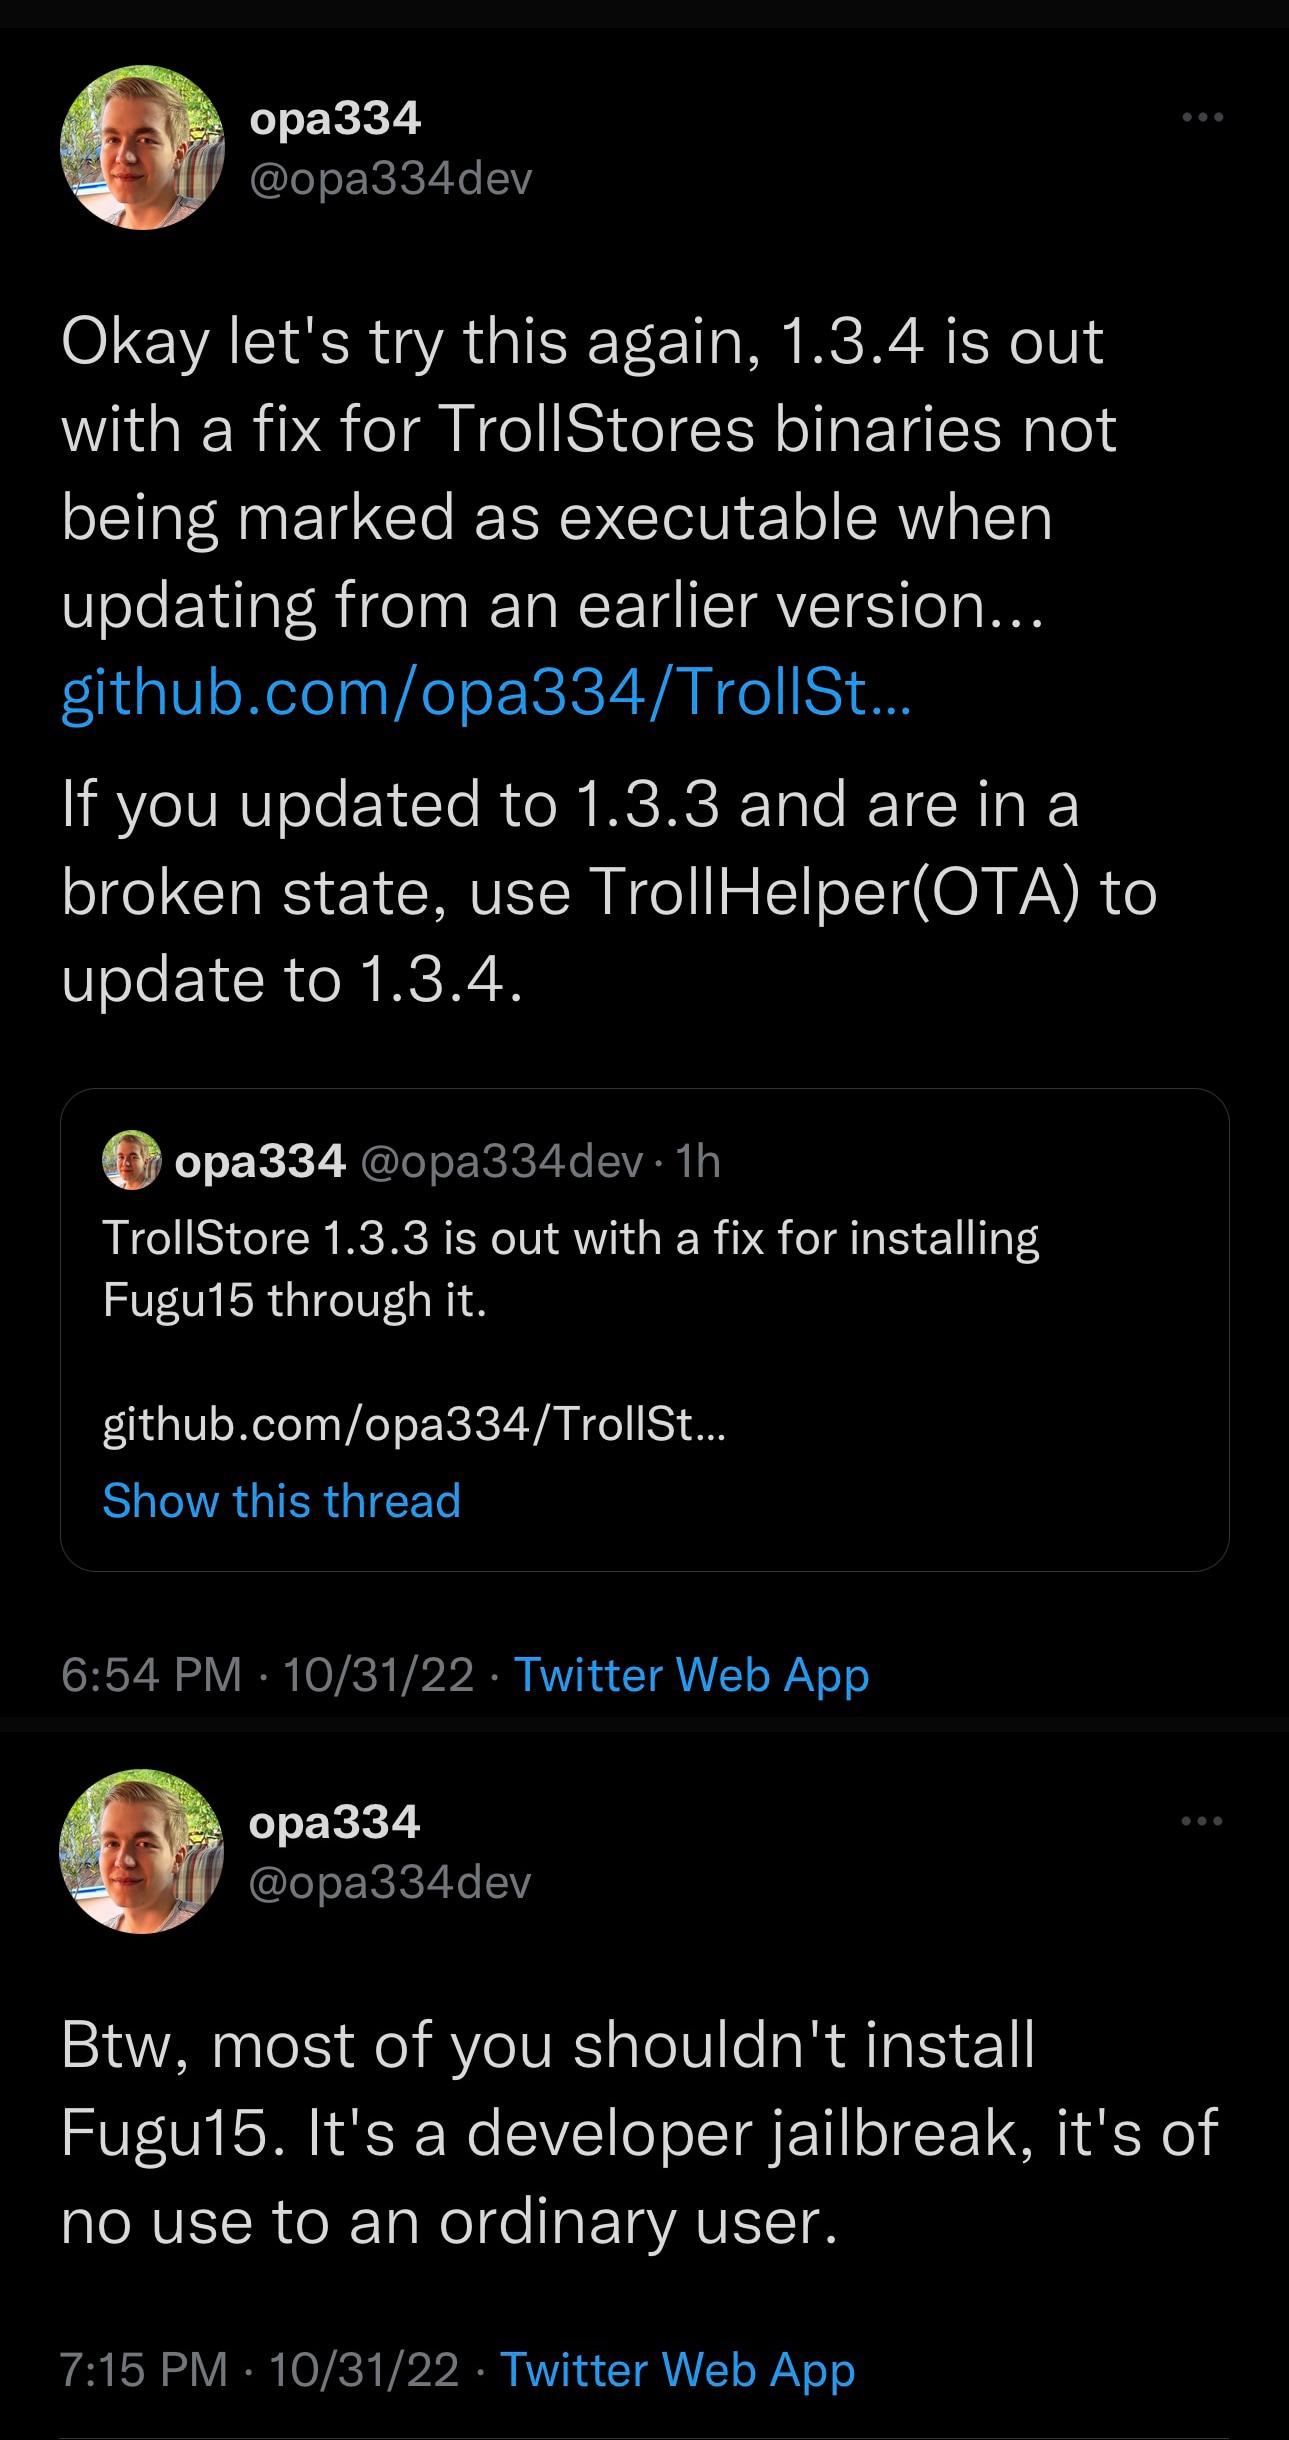 Developer opa334 announces the release of TrollStore version 1.3.4 on Twitter.